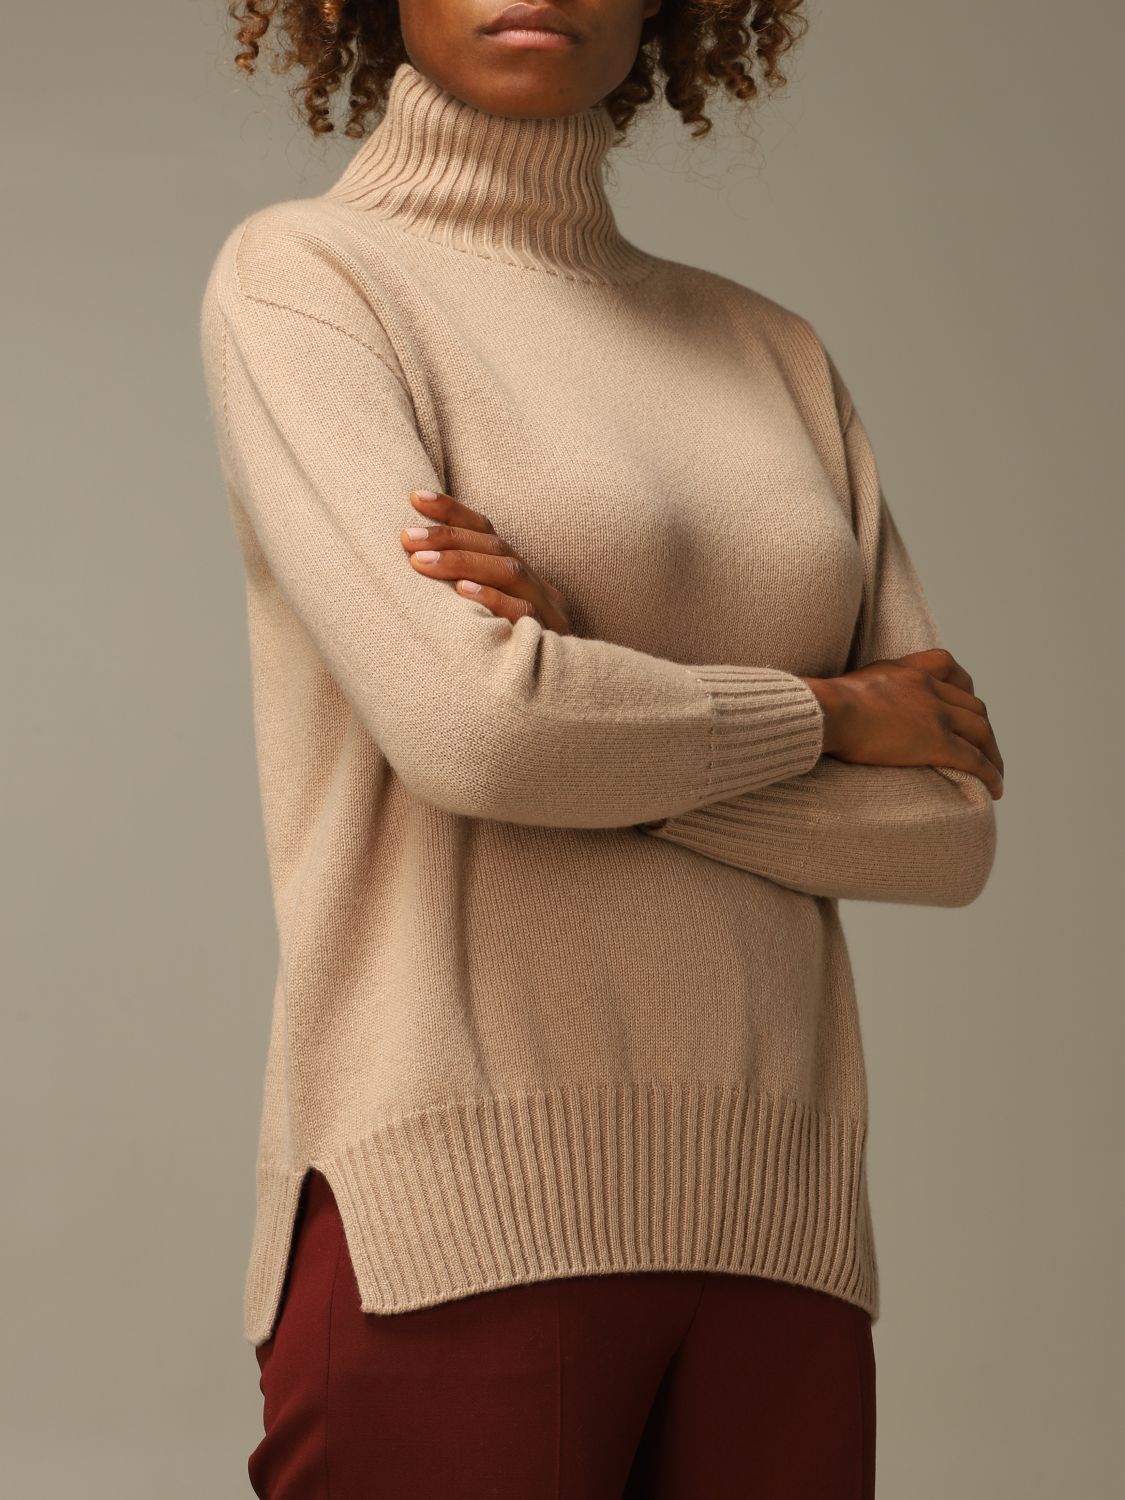 S Max Mara Outlet: Gnomo cashmere pullover - Camel | S Max Mara sweater